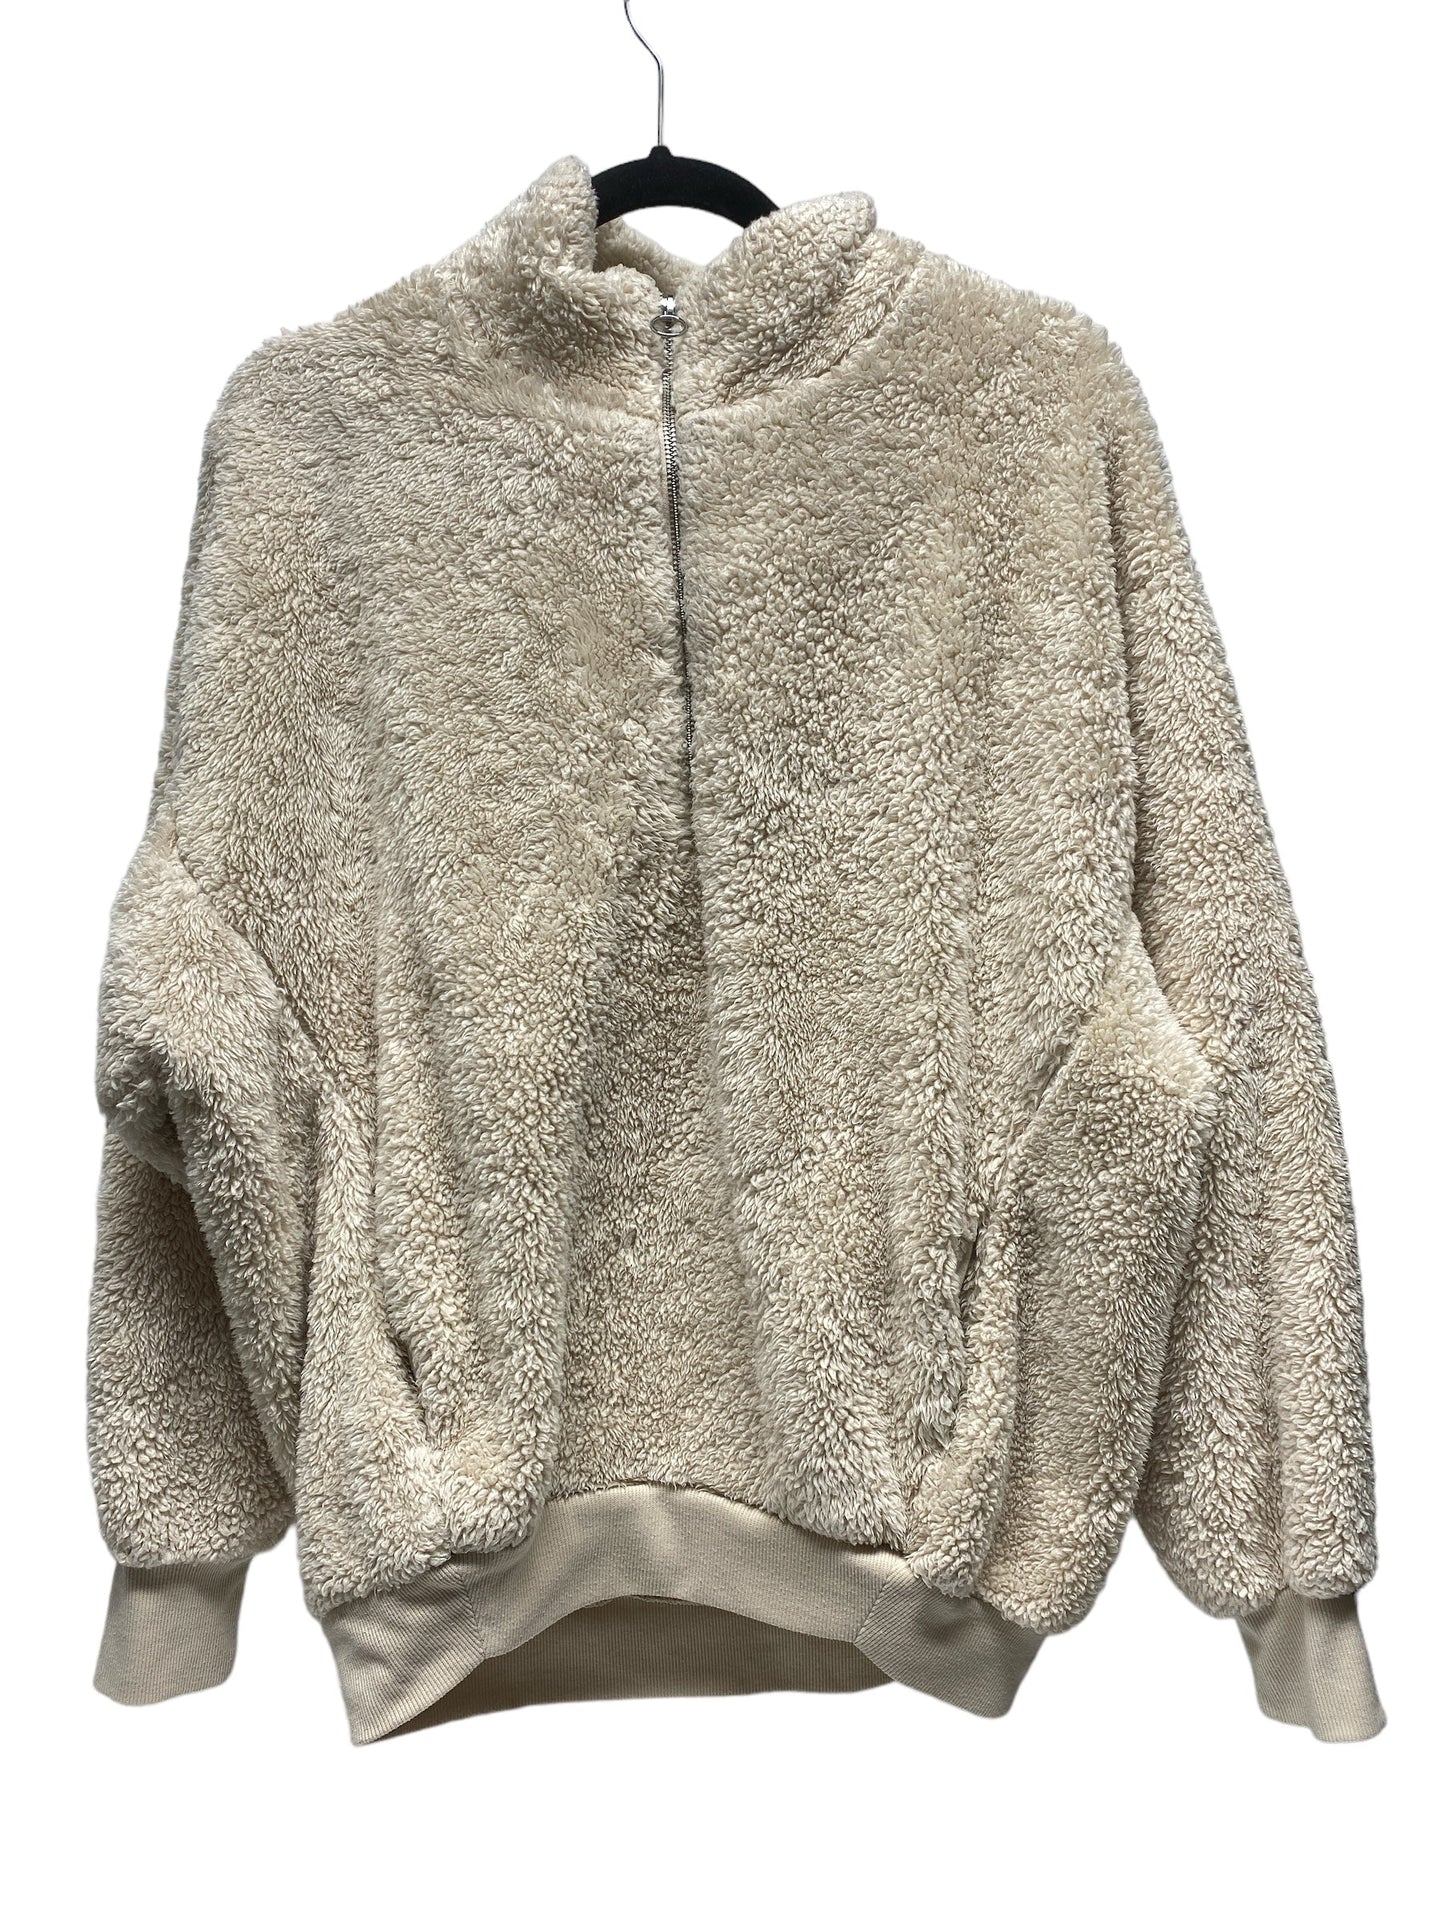 Jacket Fleece By Express  Size: S